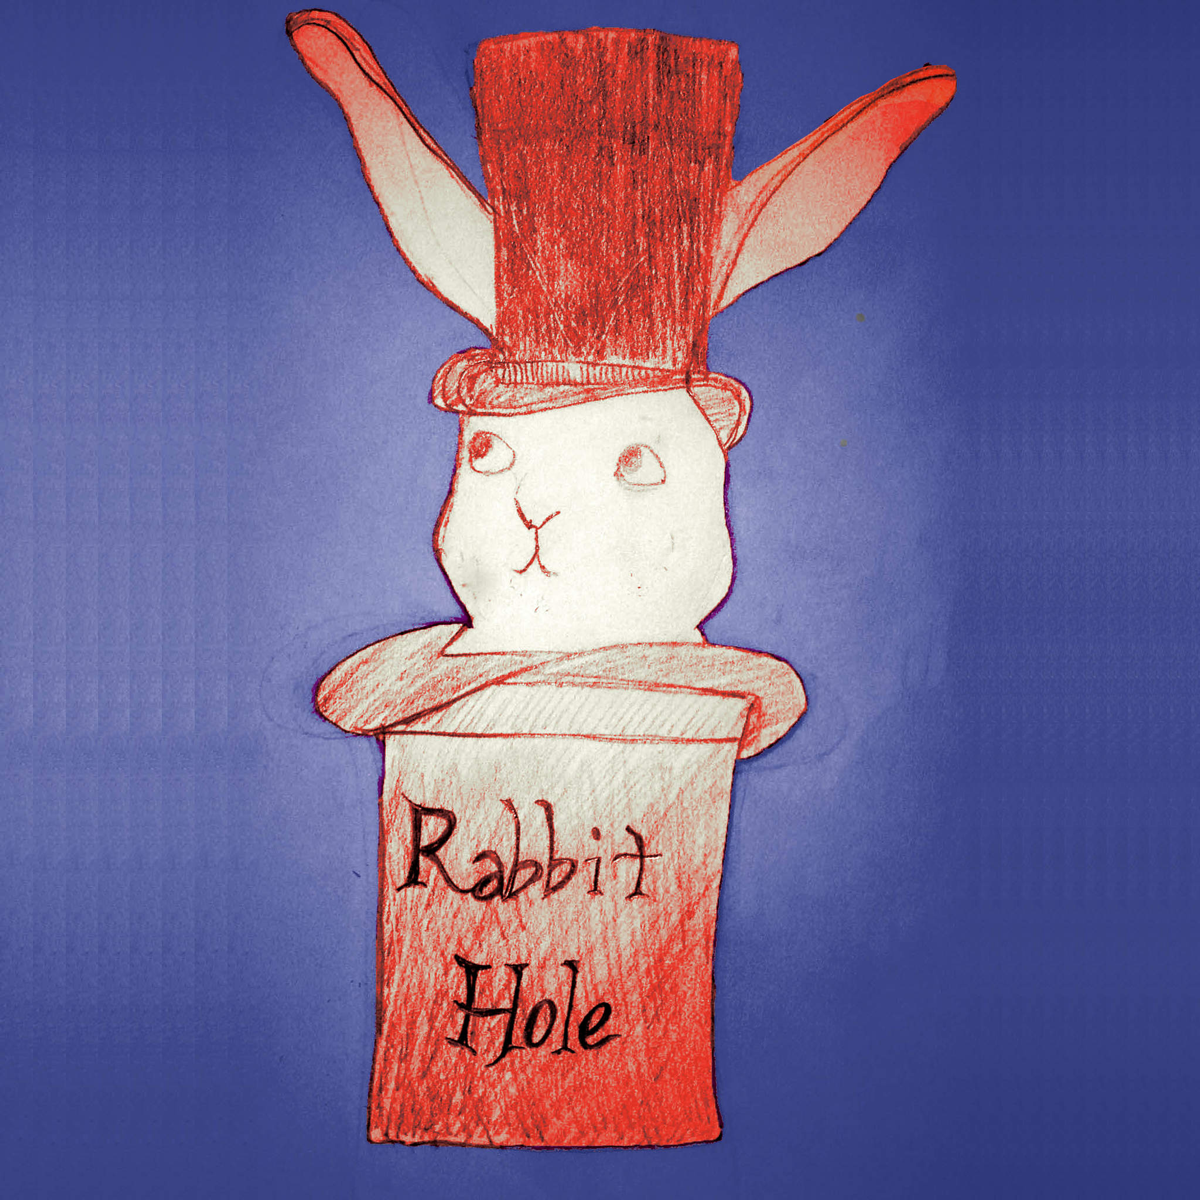 Раббит хол. Rabbit hole. The Rabbit hole картинки. Кролик и дыра. Аватарка Rabbit hole.